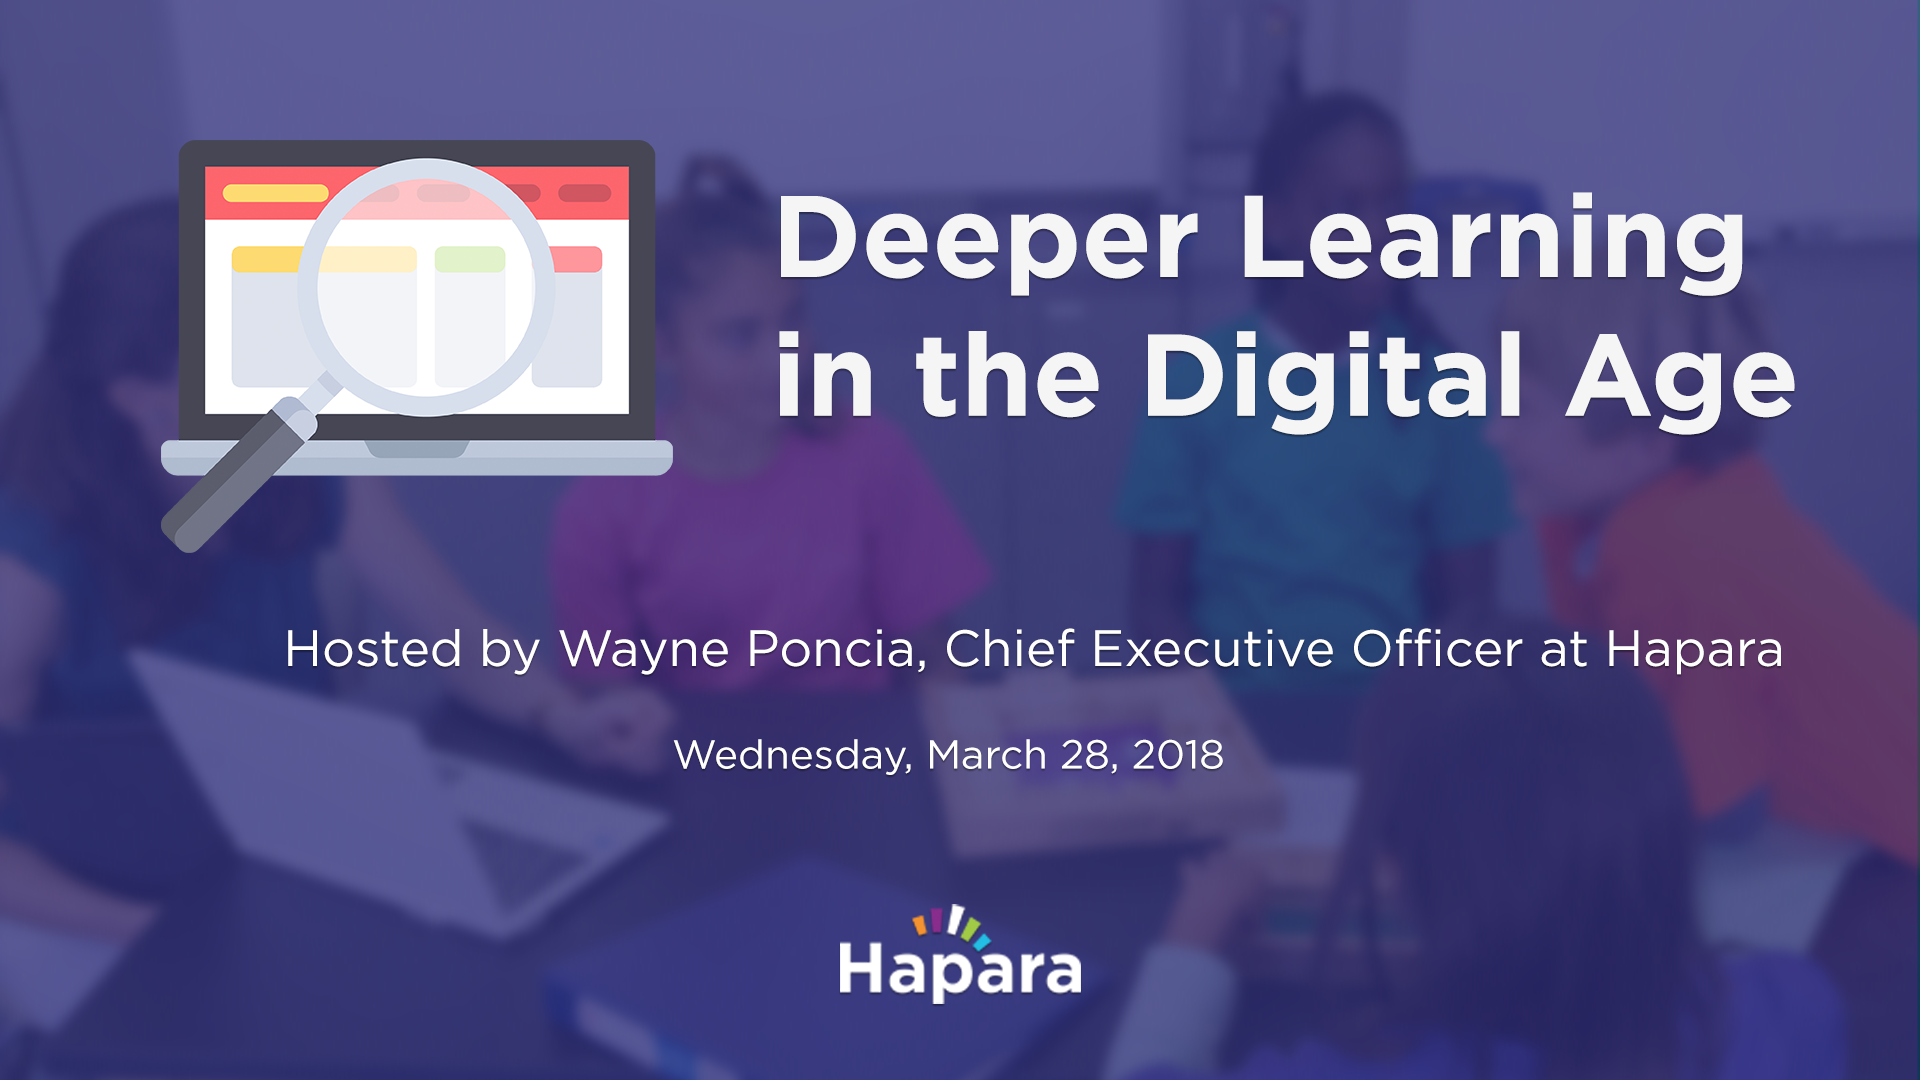 Deeper learning in a digital age